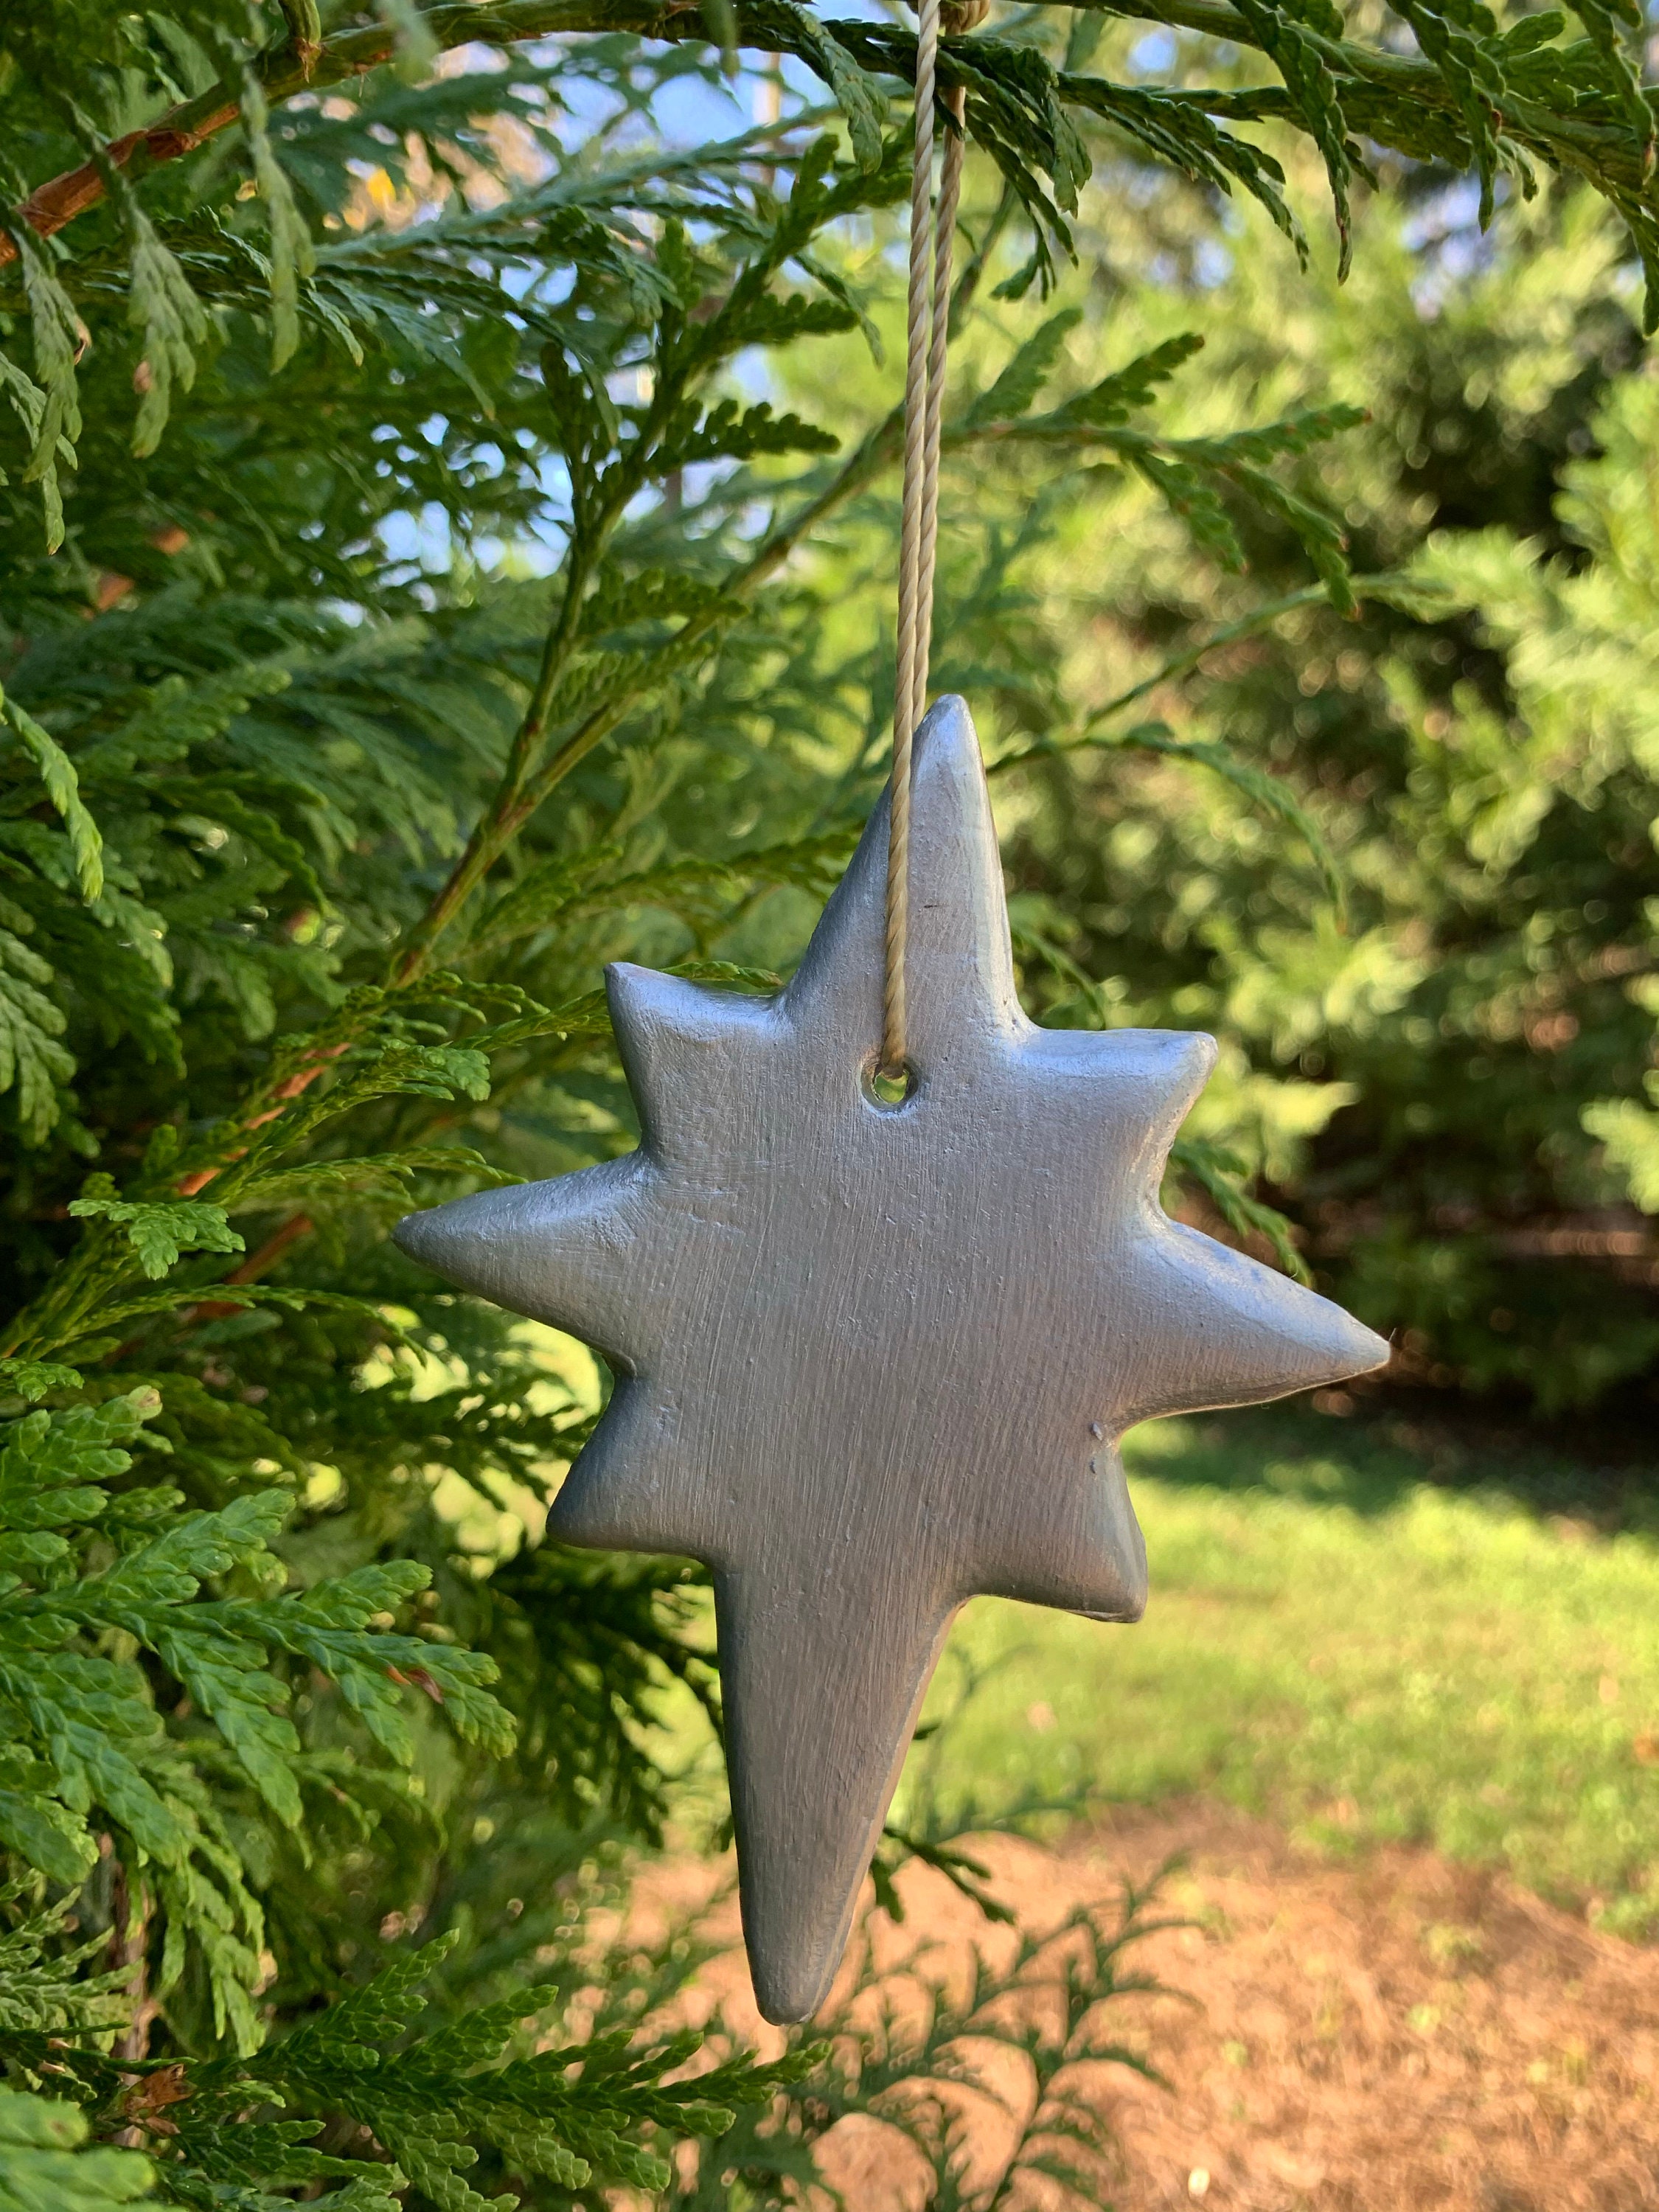 Green Moravian Star Ornament - sale